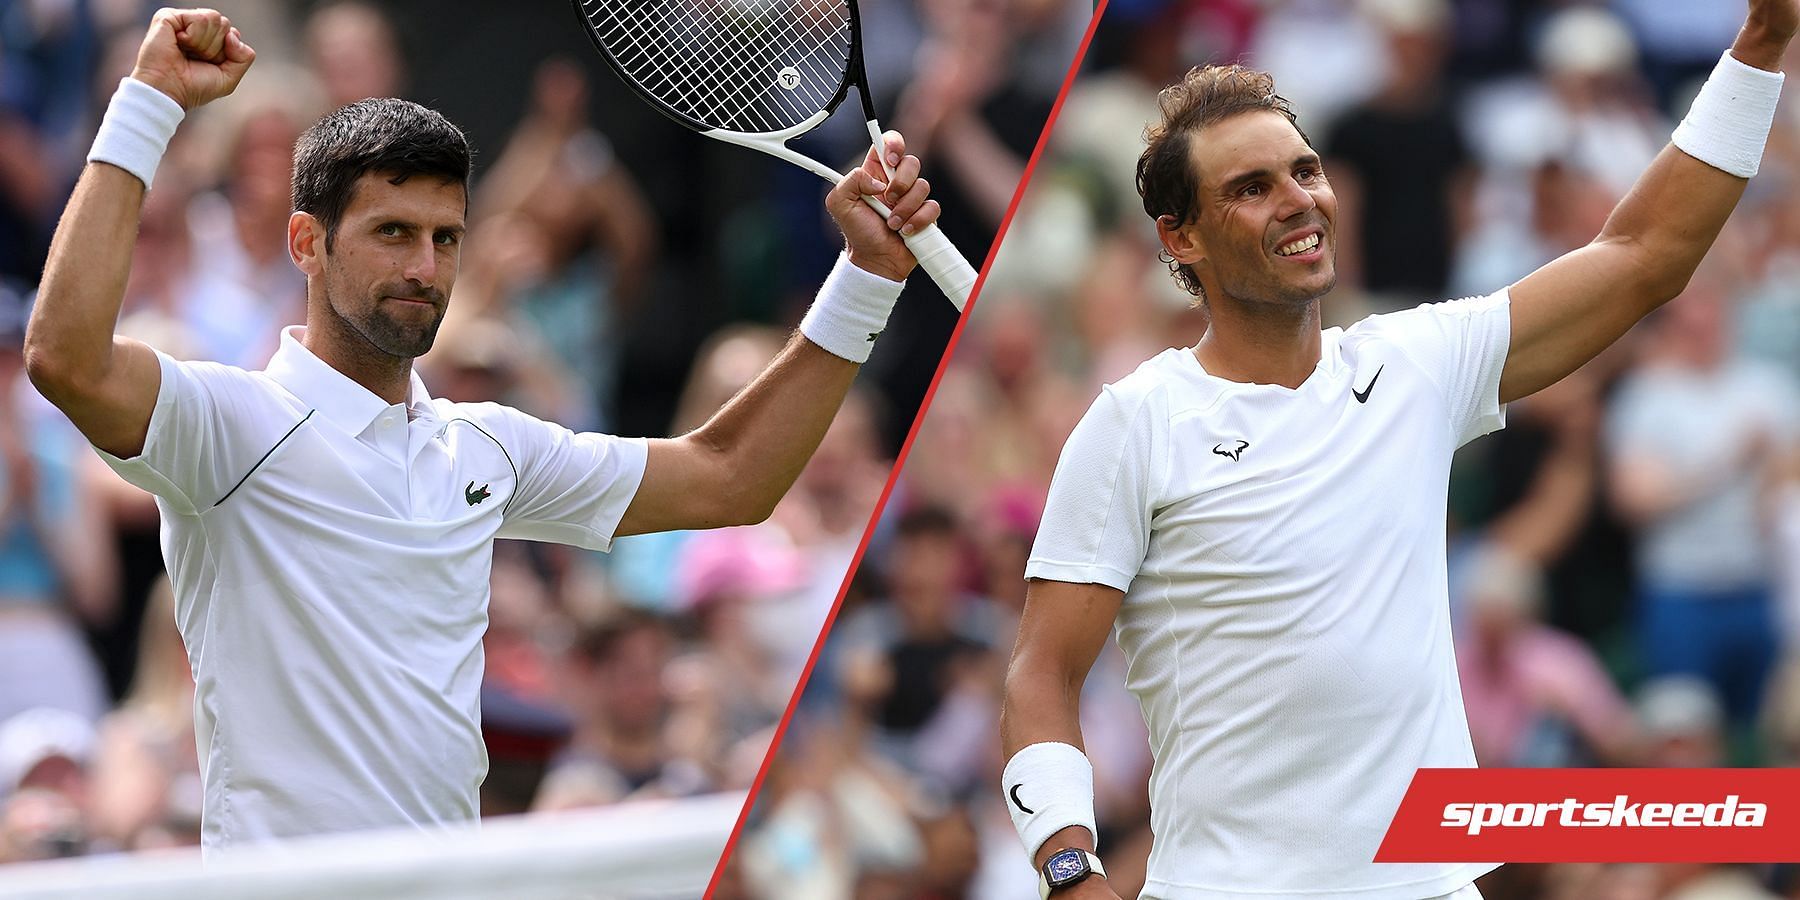 Novak Djokovic is the favorite to reach the final, while Rafael Nadal starts as an underdog at Wimbledon